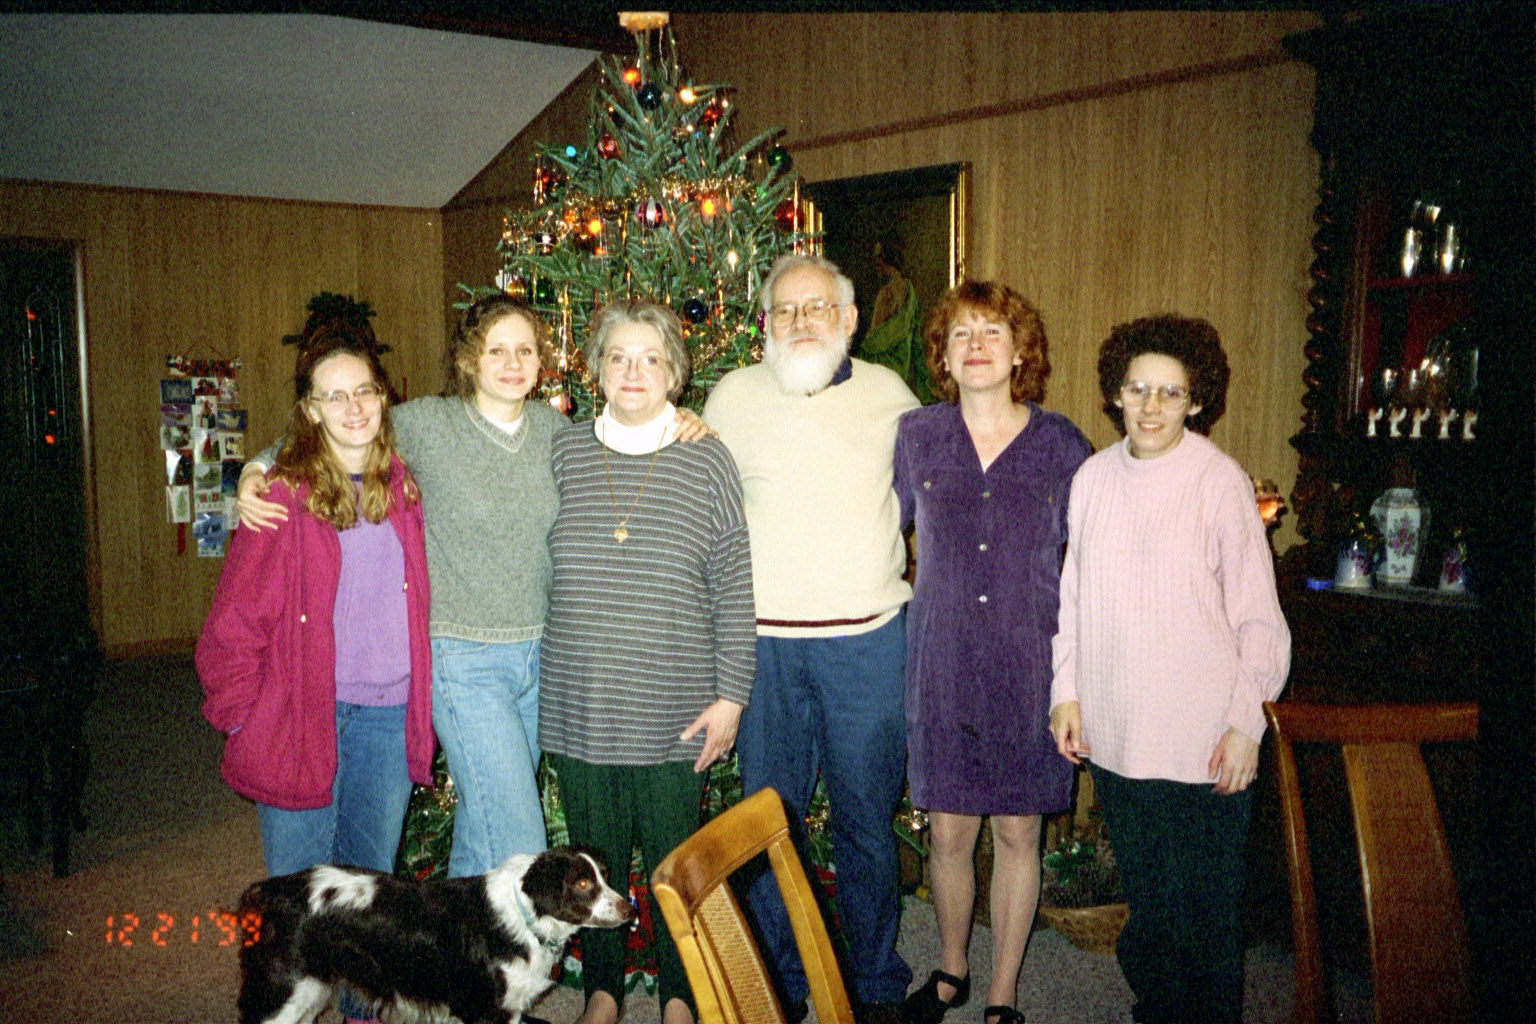 Aleta, Alexis (me!), Mommy, Daddy (a.k.a. Santa Claus), Allison, and Leila